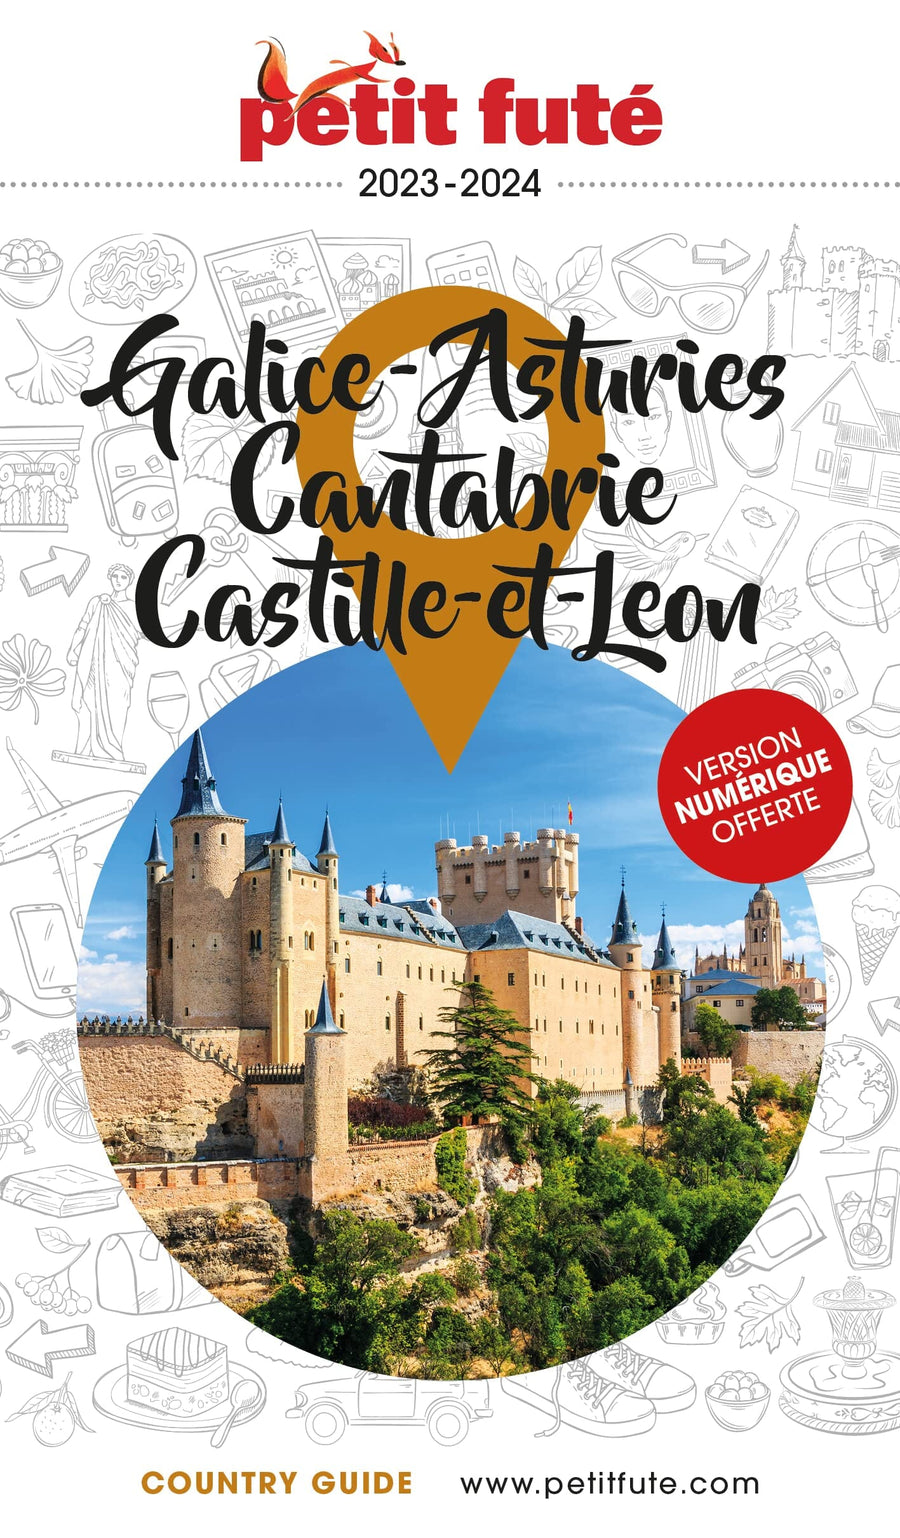 Guide de voyage - Galice, Asturies, Cantabrie, Castille-et-Leon 2023/24 | Petit Futé guide de voyage Petit Futé 